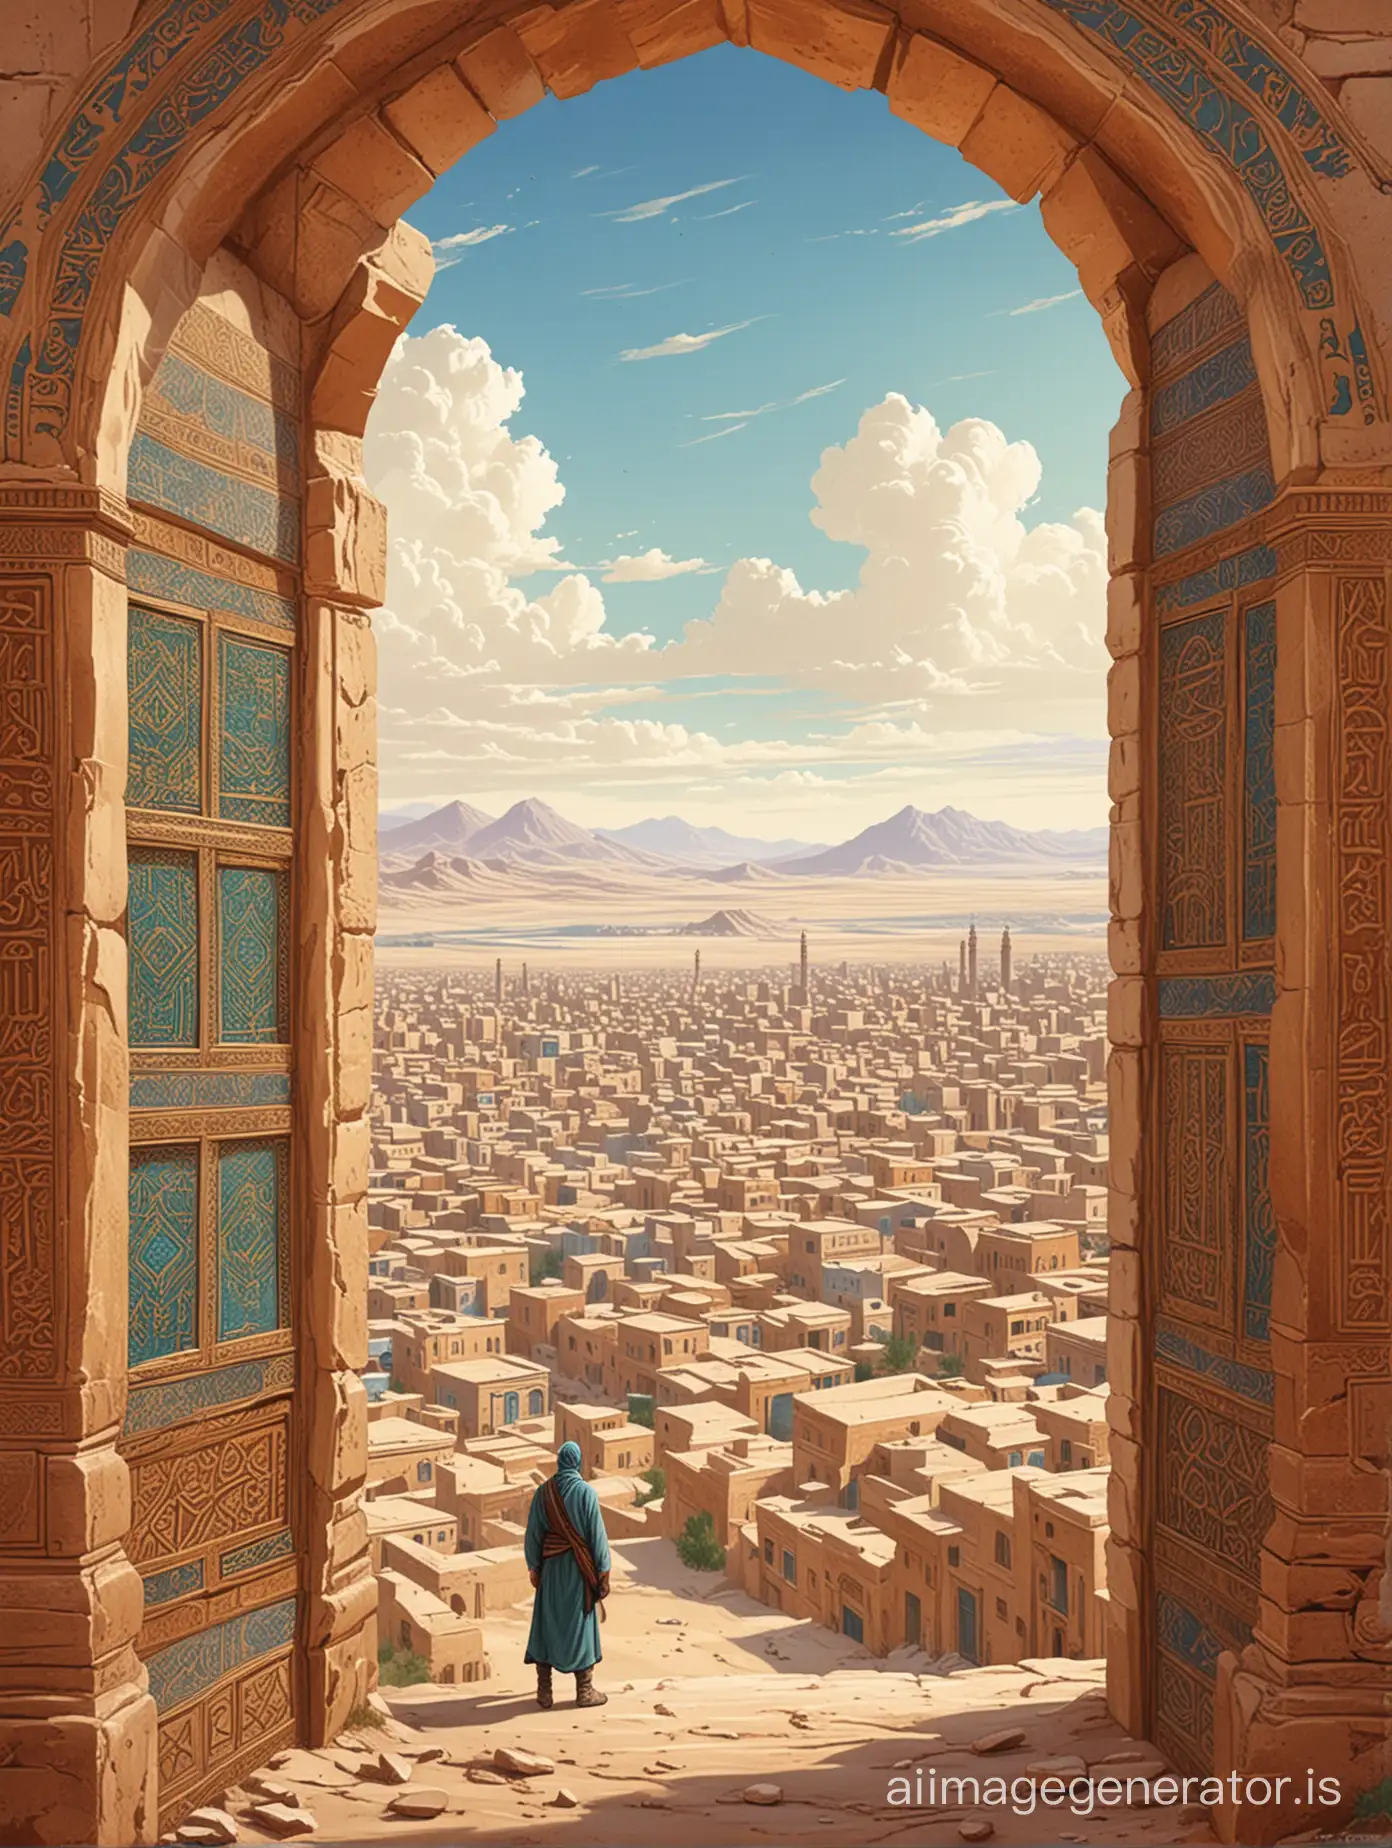 Ancient-Khorezm-Cityscape-Oriental-Style-Book-Cover-Illustration